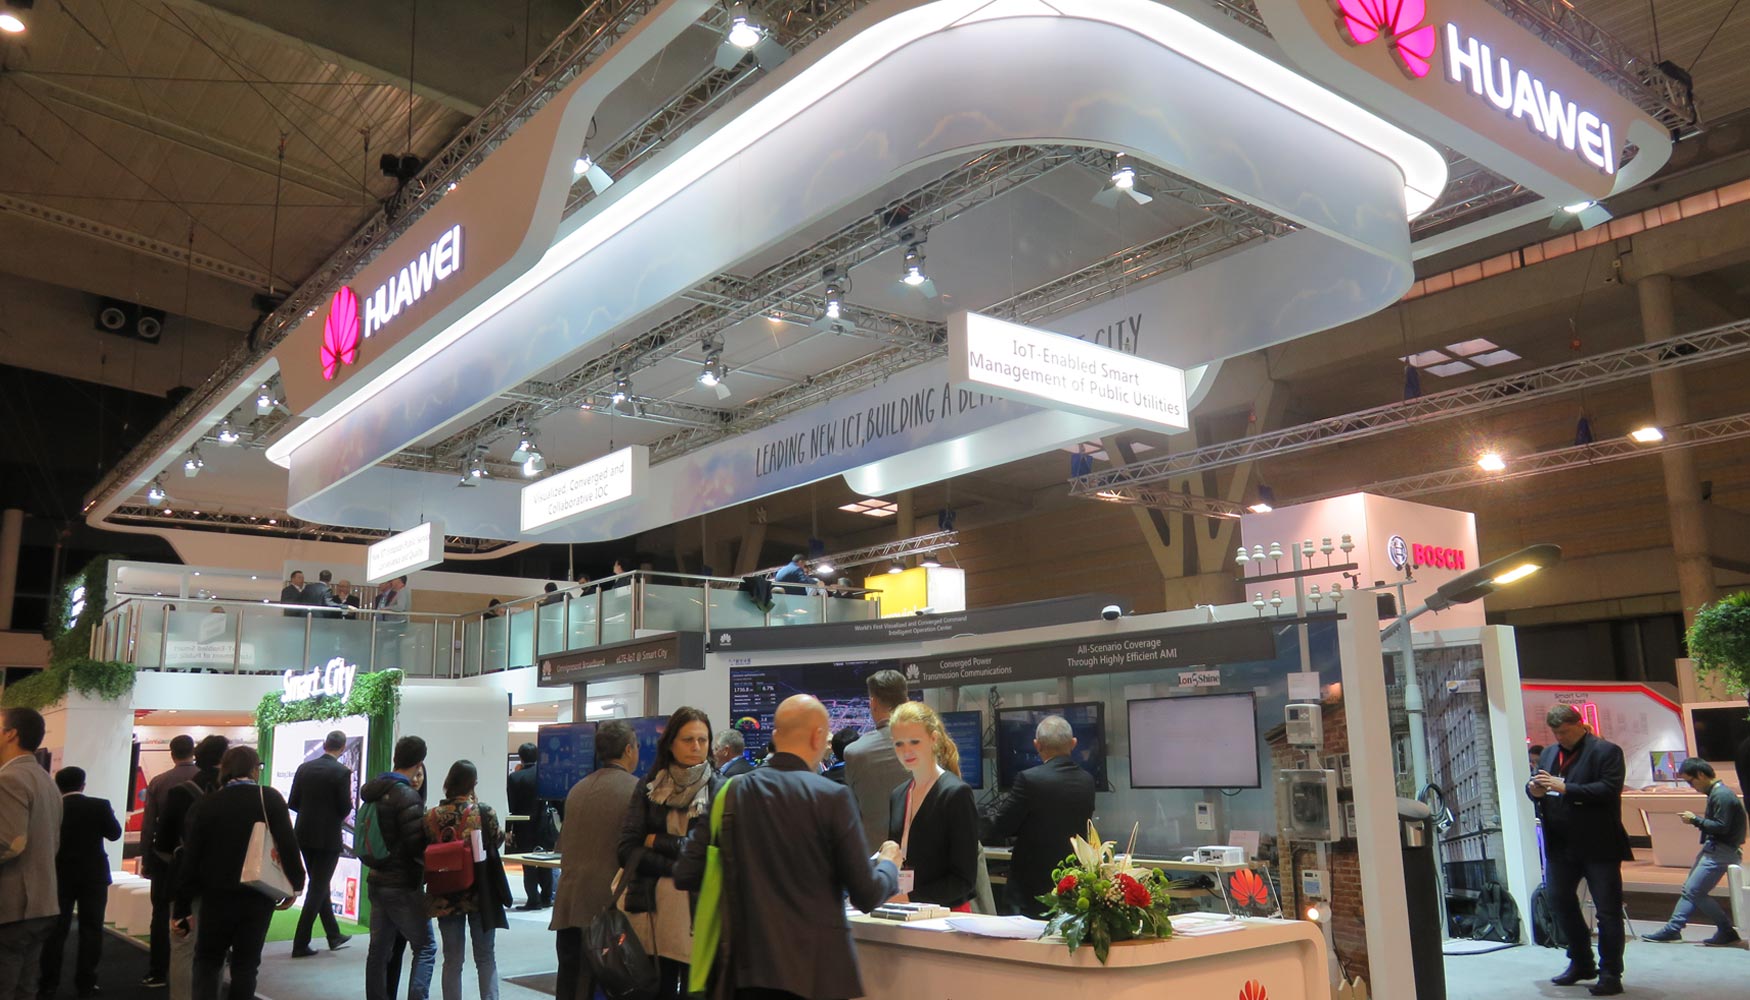 Stand de Huawei en el Smart City Expo World Congress